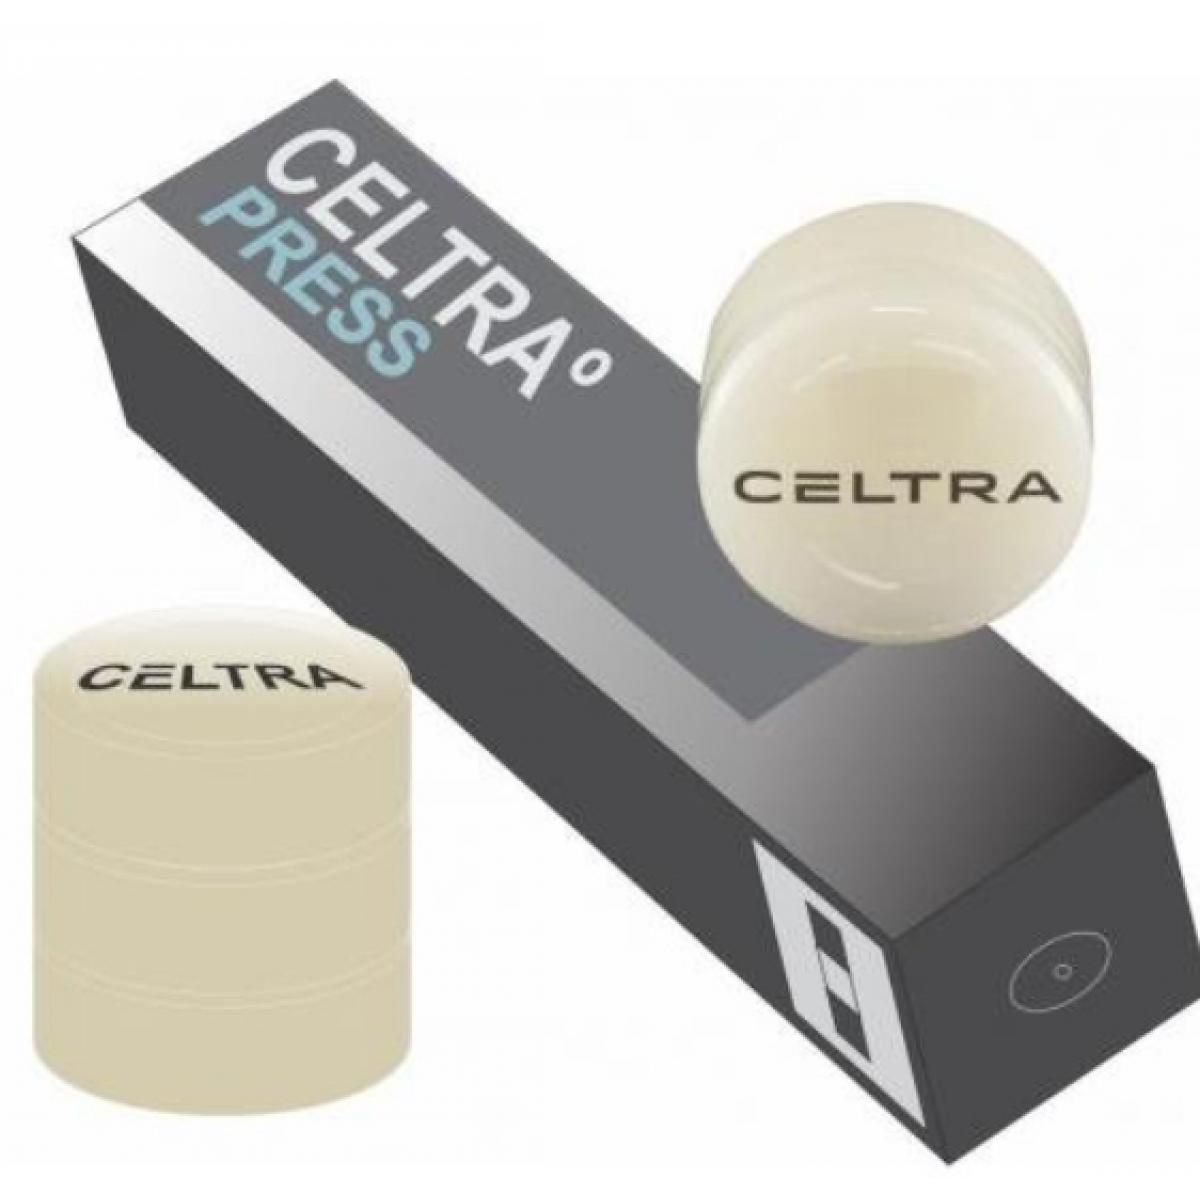 CELTRA PRESS MT A1 3 X 6 GR DENTSPLY -